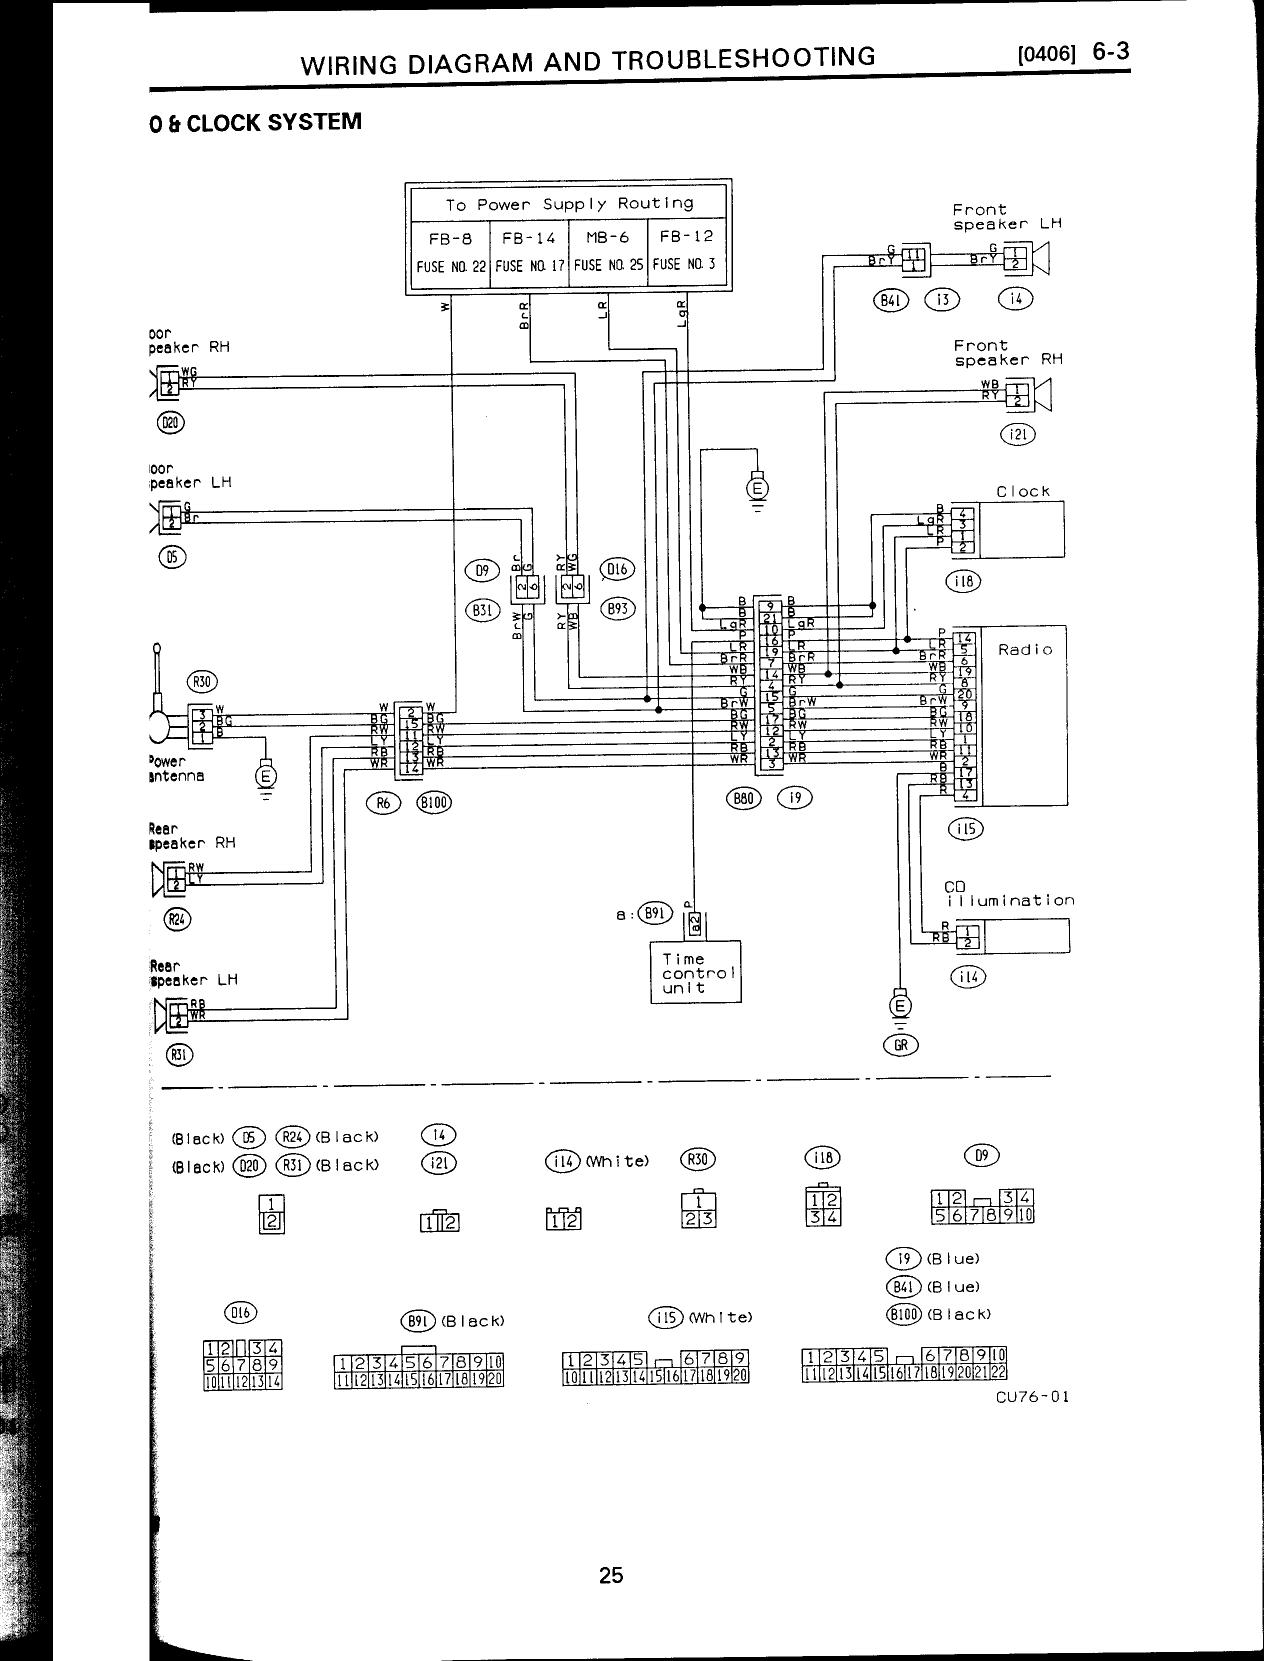 SUBARU - Car PDF Manual, Wiring Diagram & Fault Codes DTC  2000 Impreza A C Wiring Diagram    CAR PDF Manuals & Fault Codes DTC